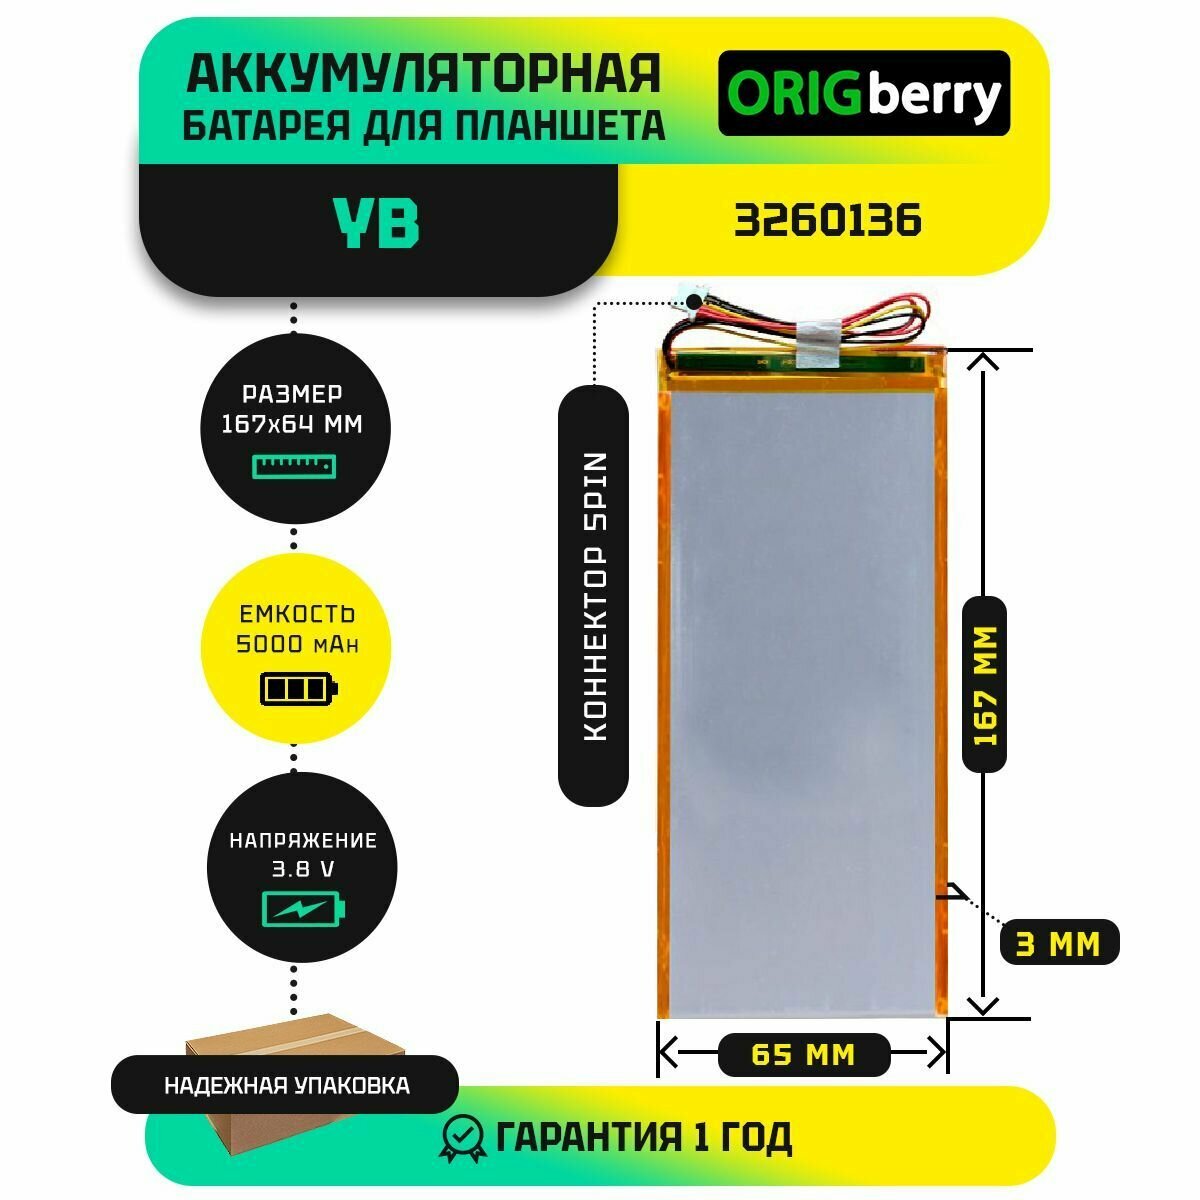 Аккумулятор для планшета YB 3260136 3,8 V / 5000 mAh / 167мм x 65мм / коннектор 5 PIN